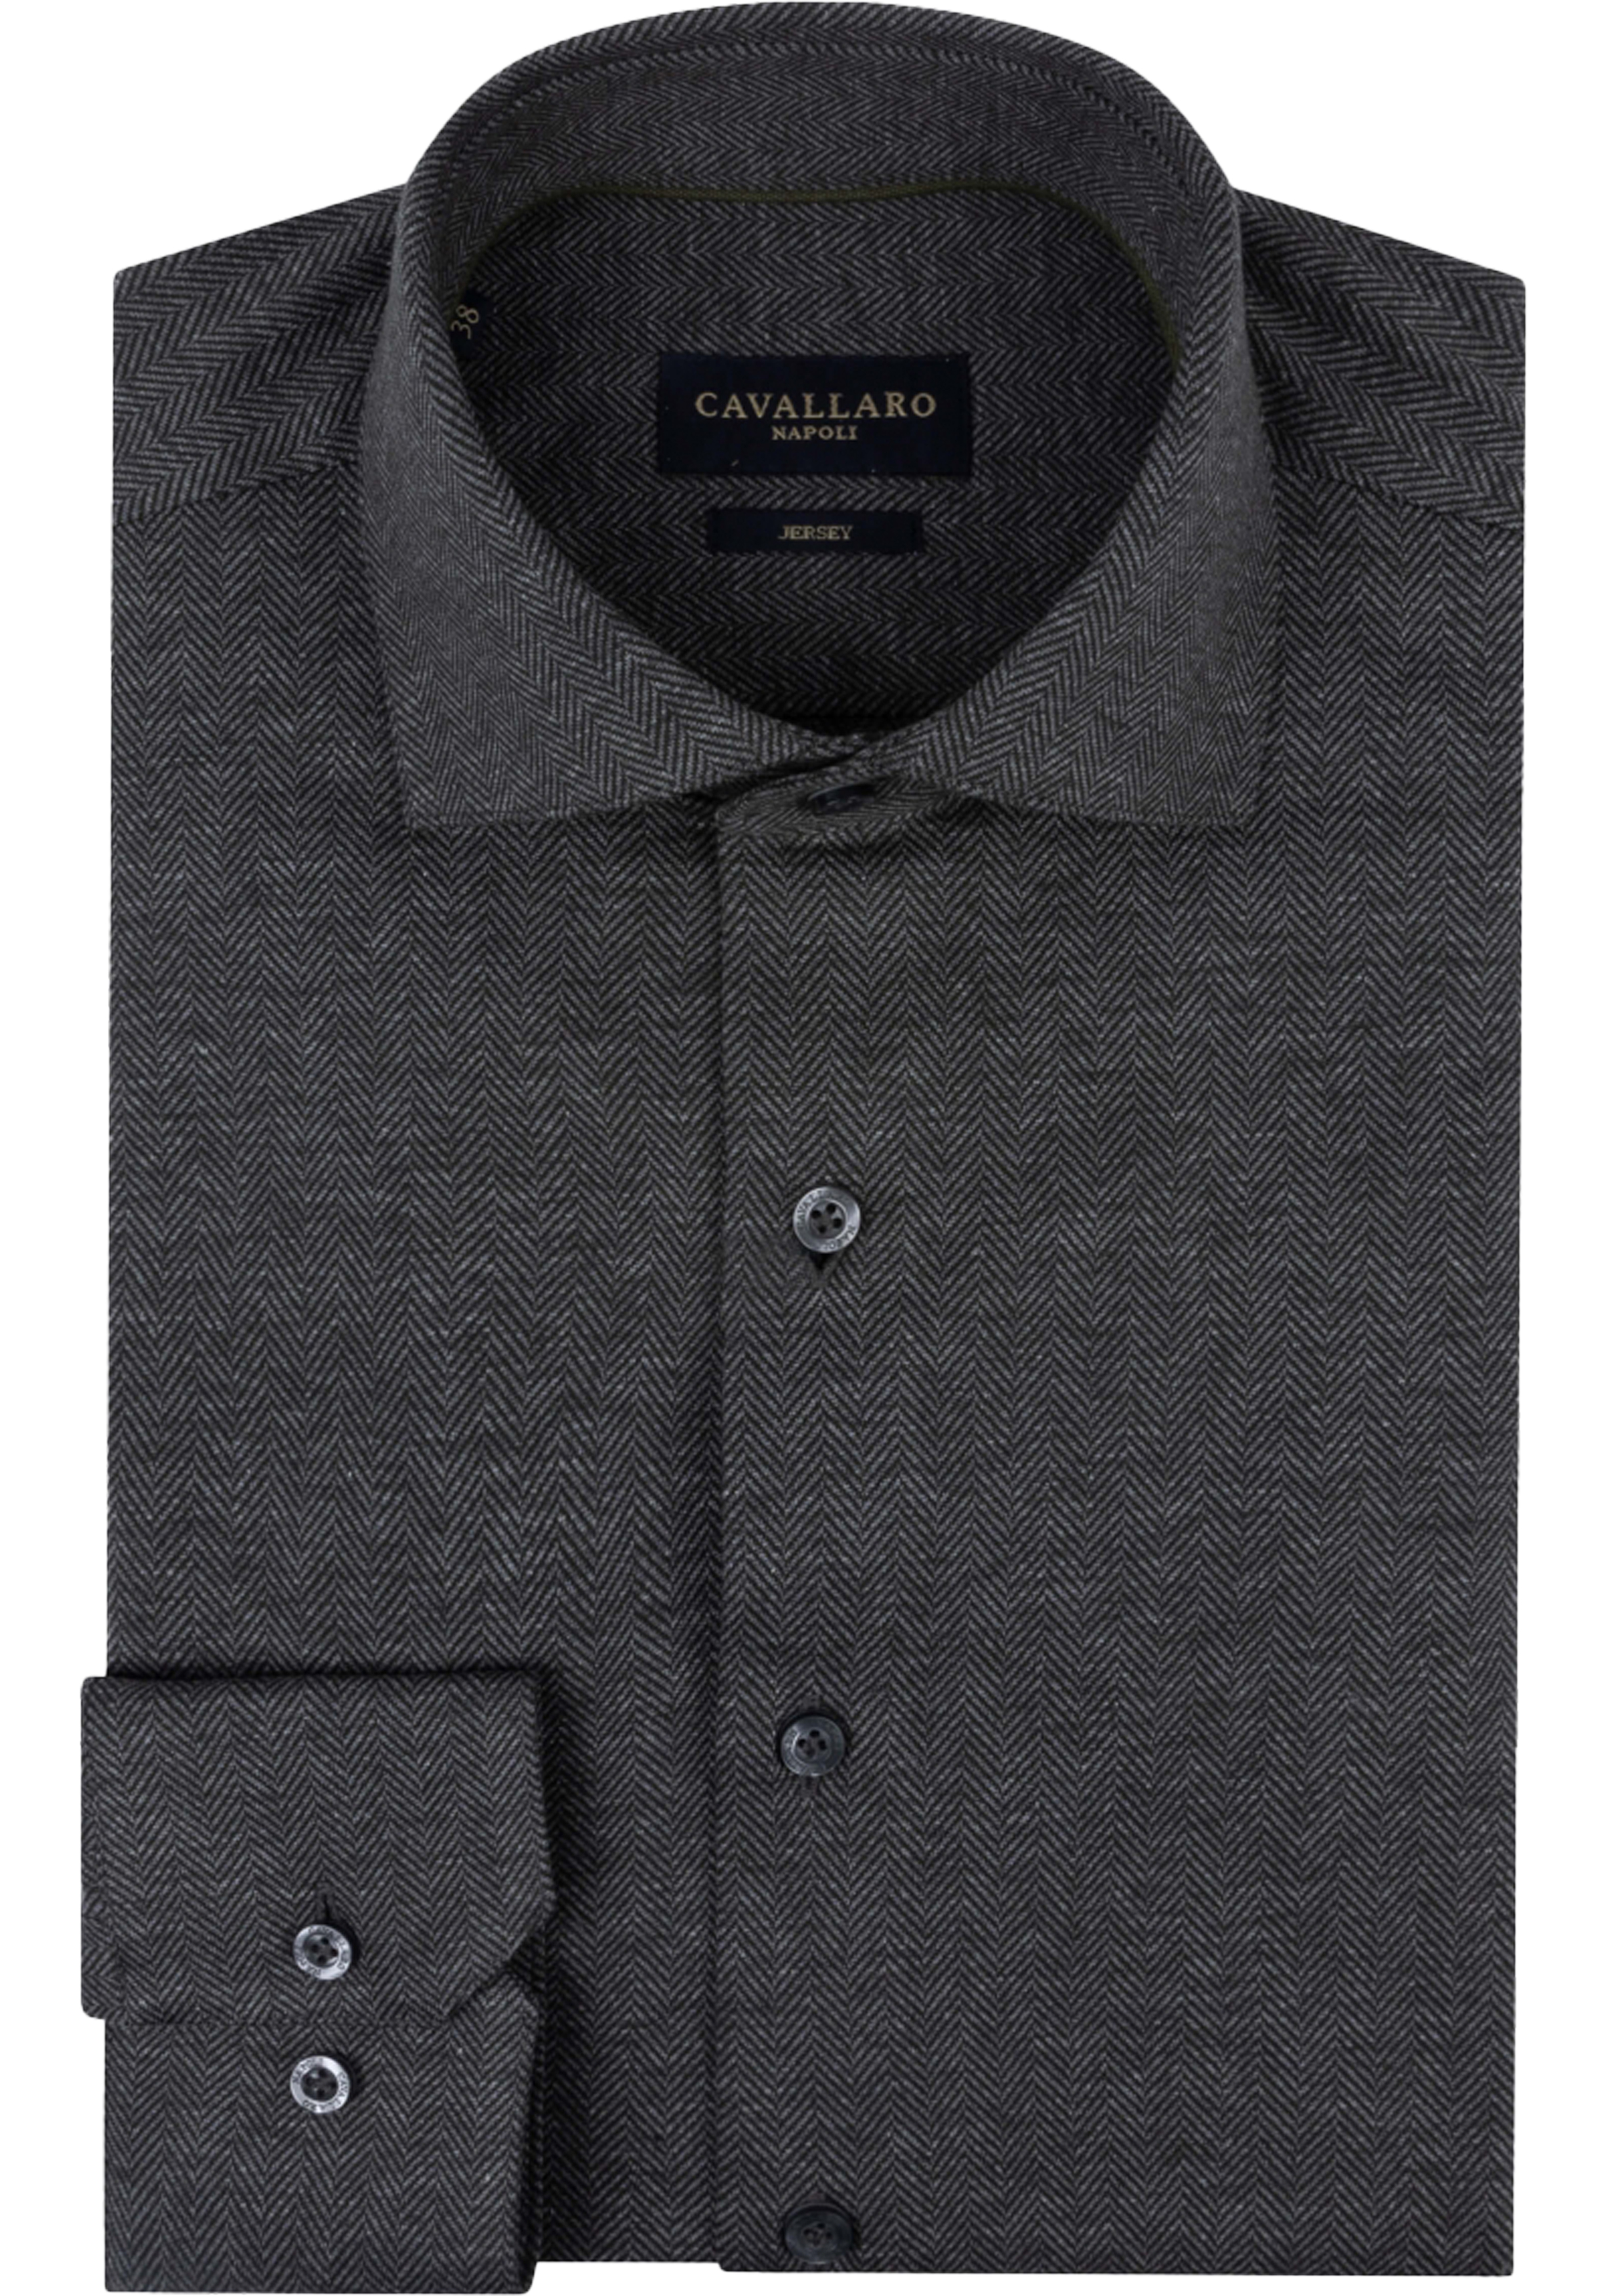 Cavallaro Napoli Briziano slim fit overhemd, tricot, groen